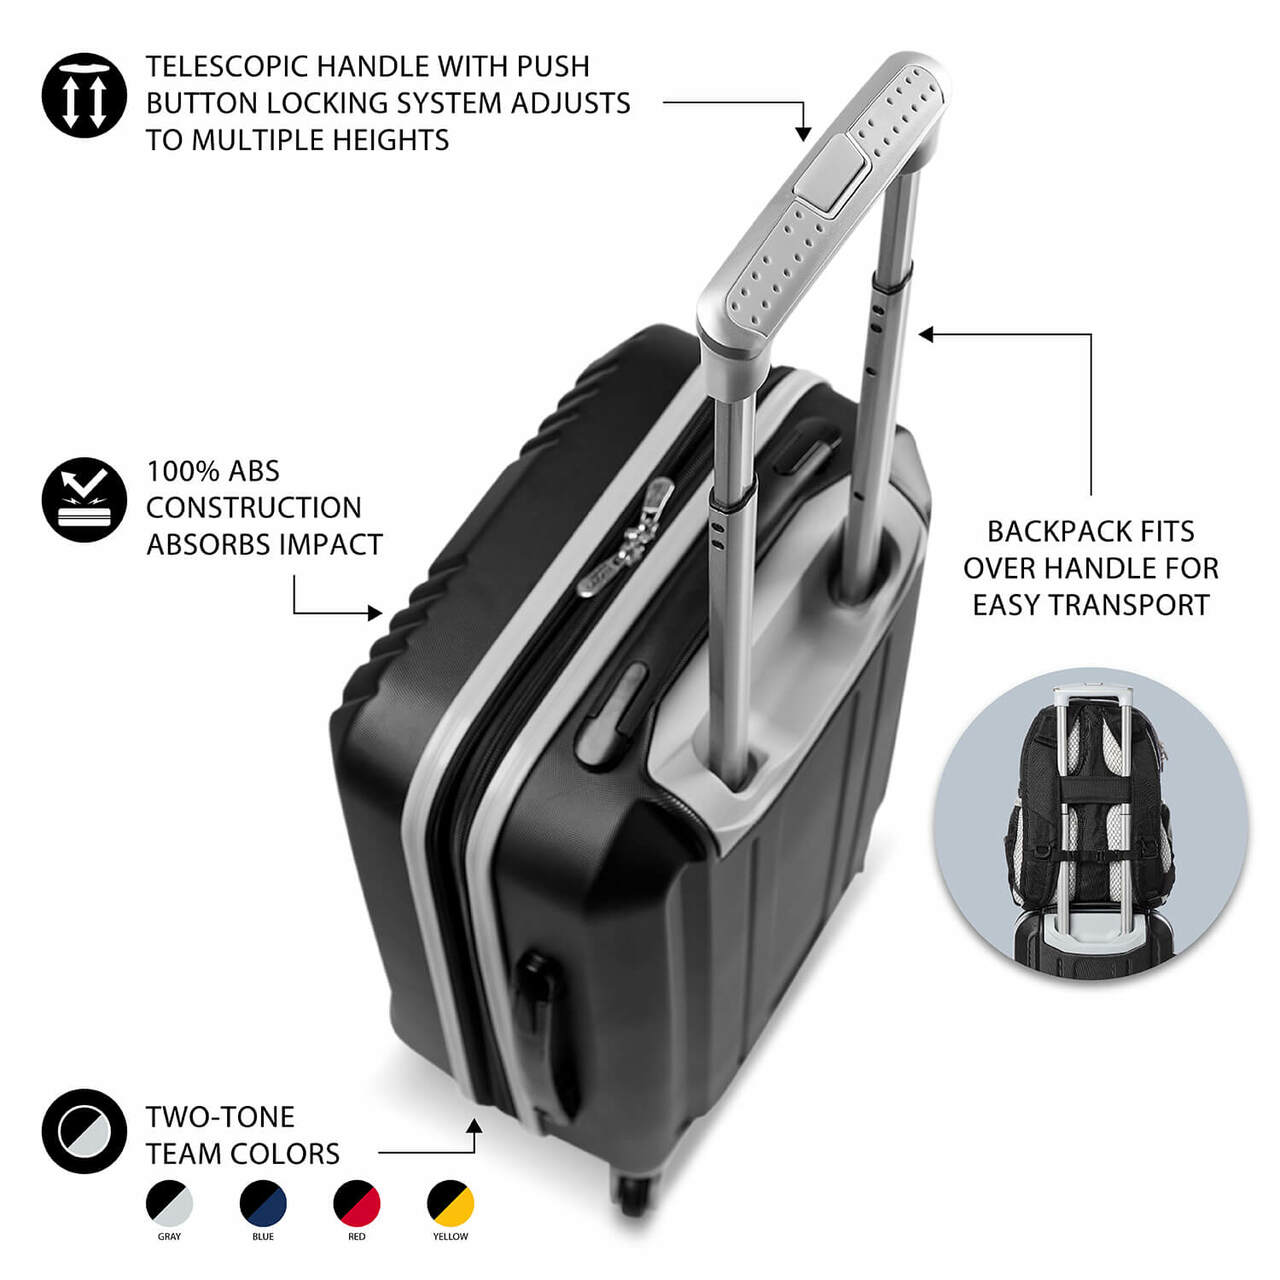 San Antonio Spurs 2 Piece Premium Colored Trim Backpack and Luggage Set